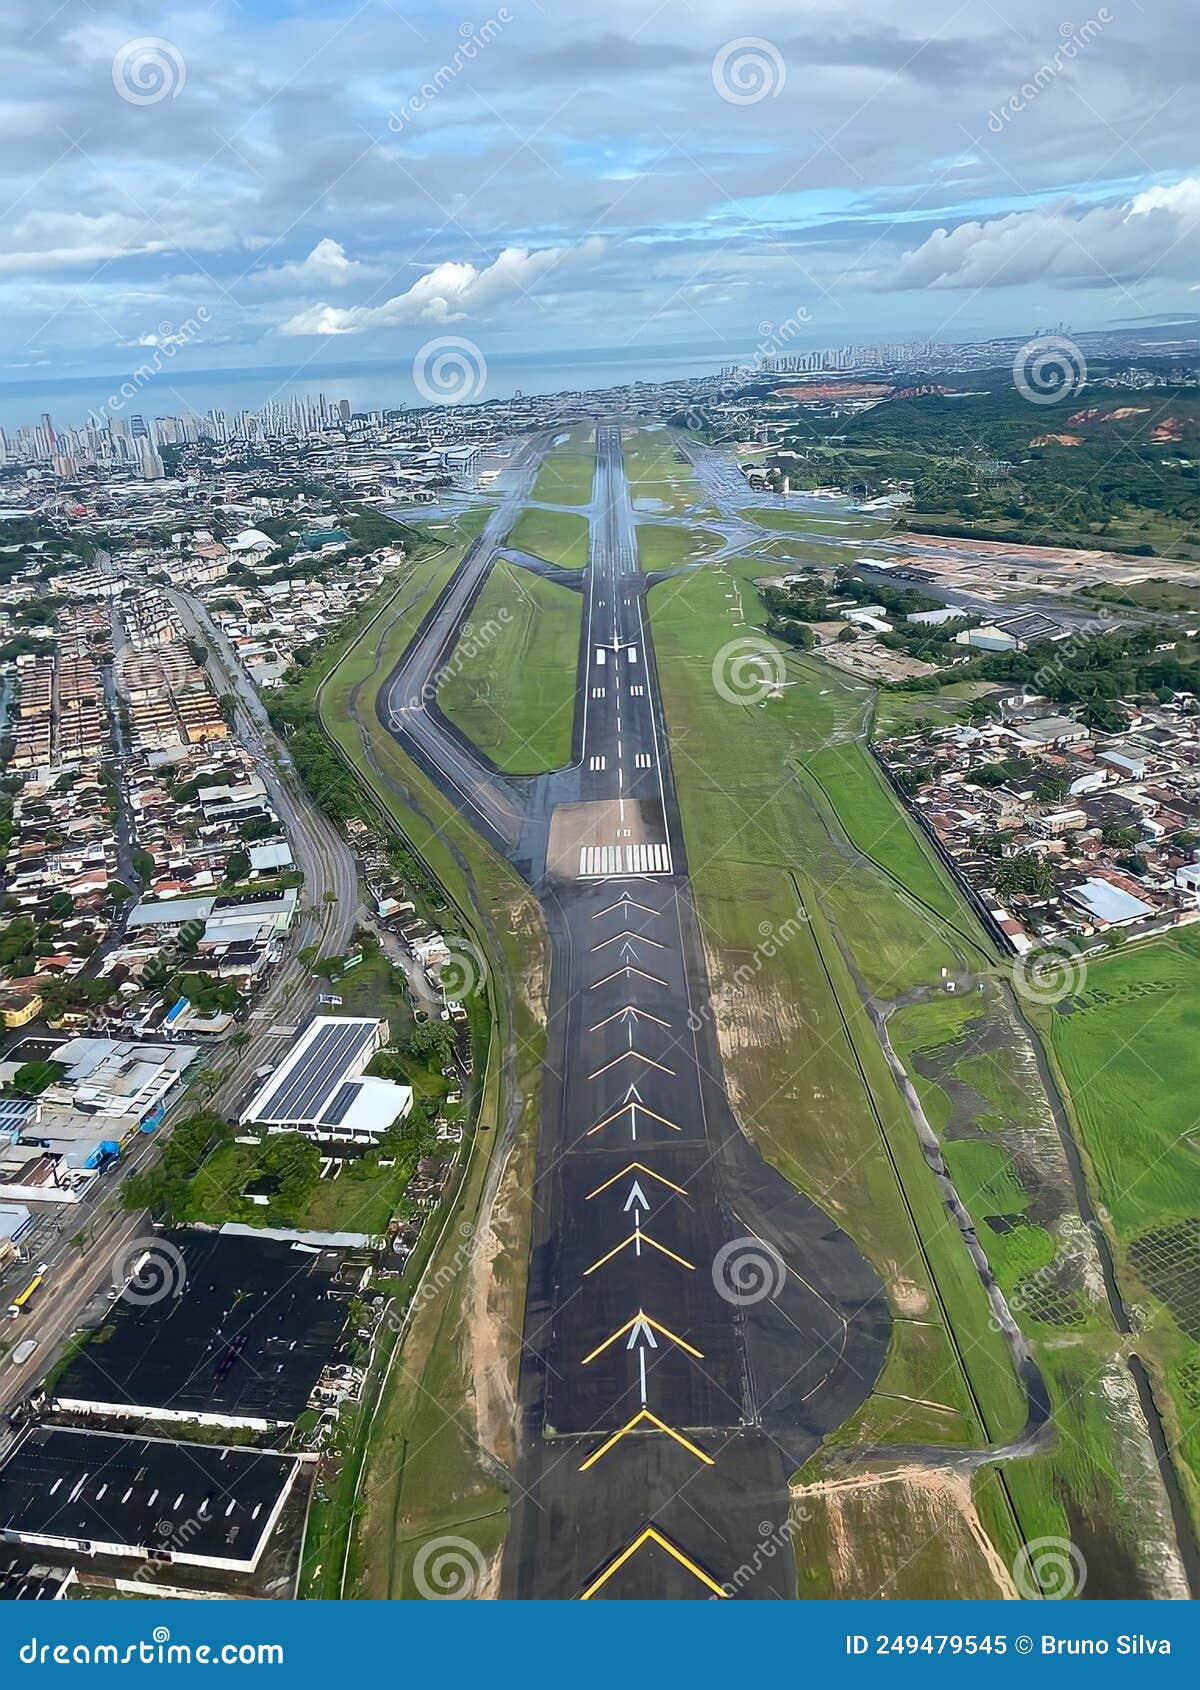 aerial view internacional airport of recife, brazil